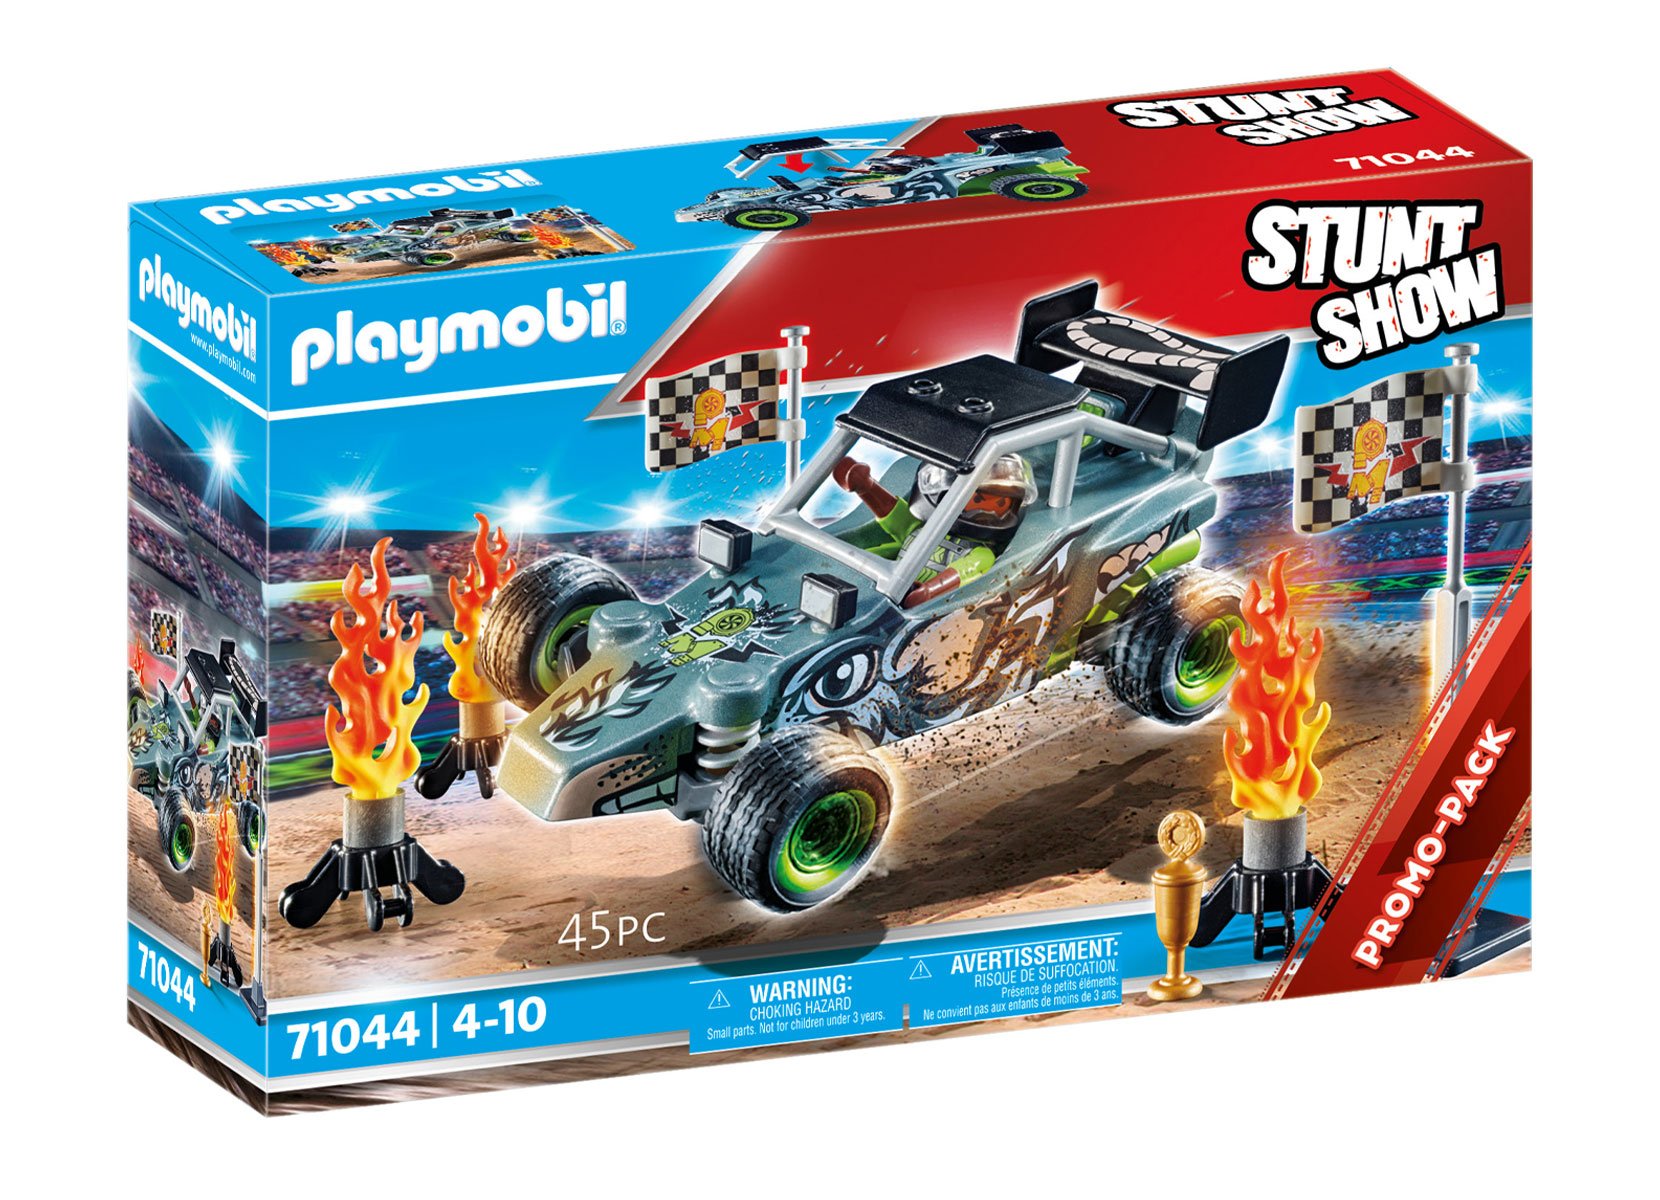 Playmobil 71044 Stuntshow Racer